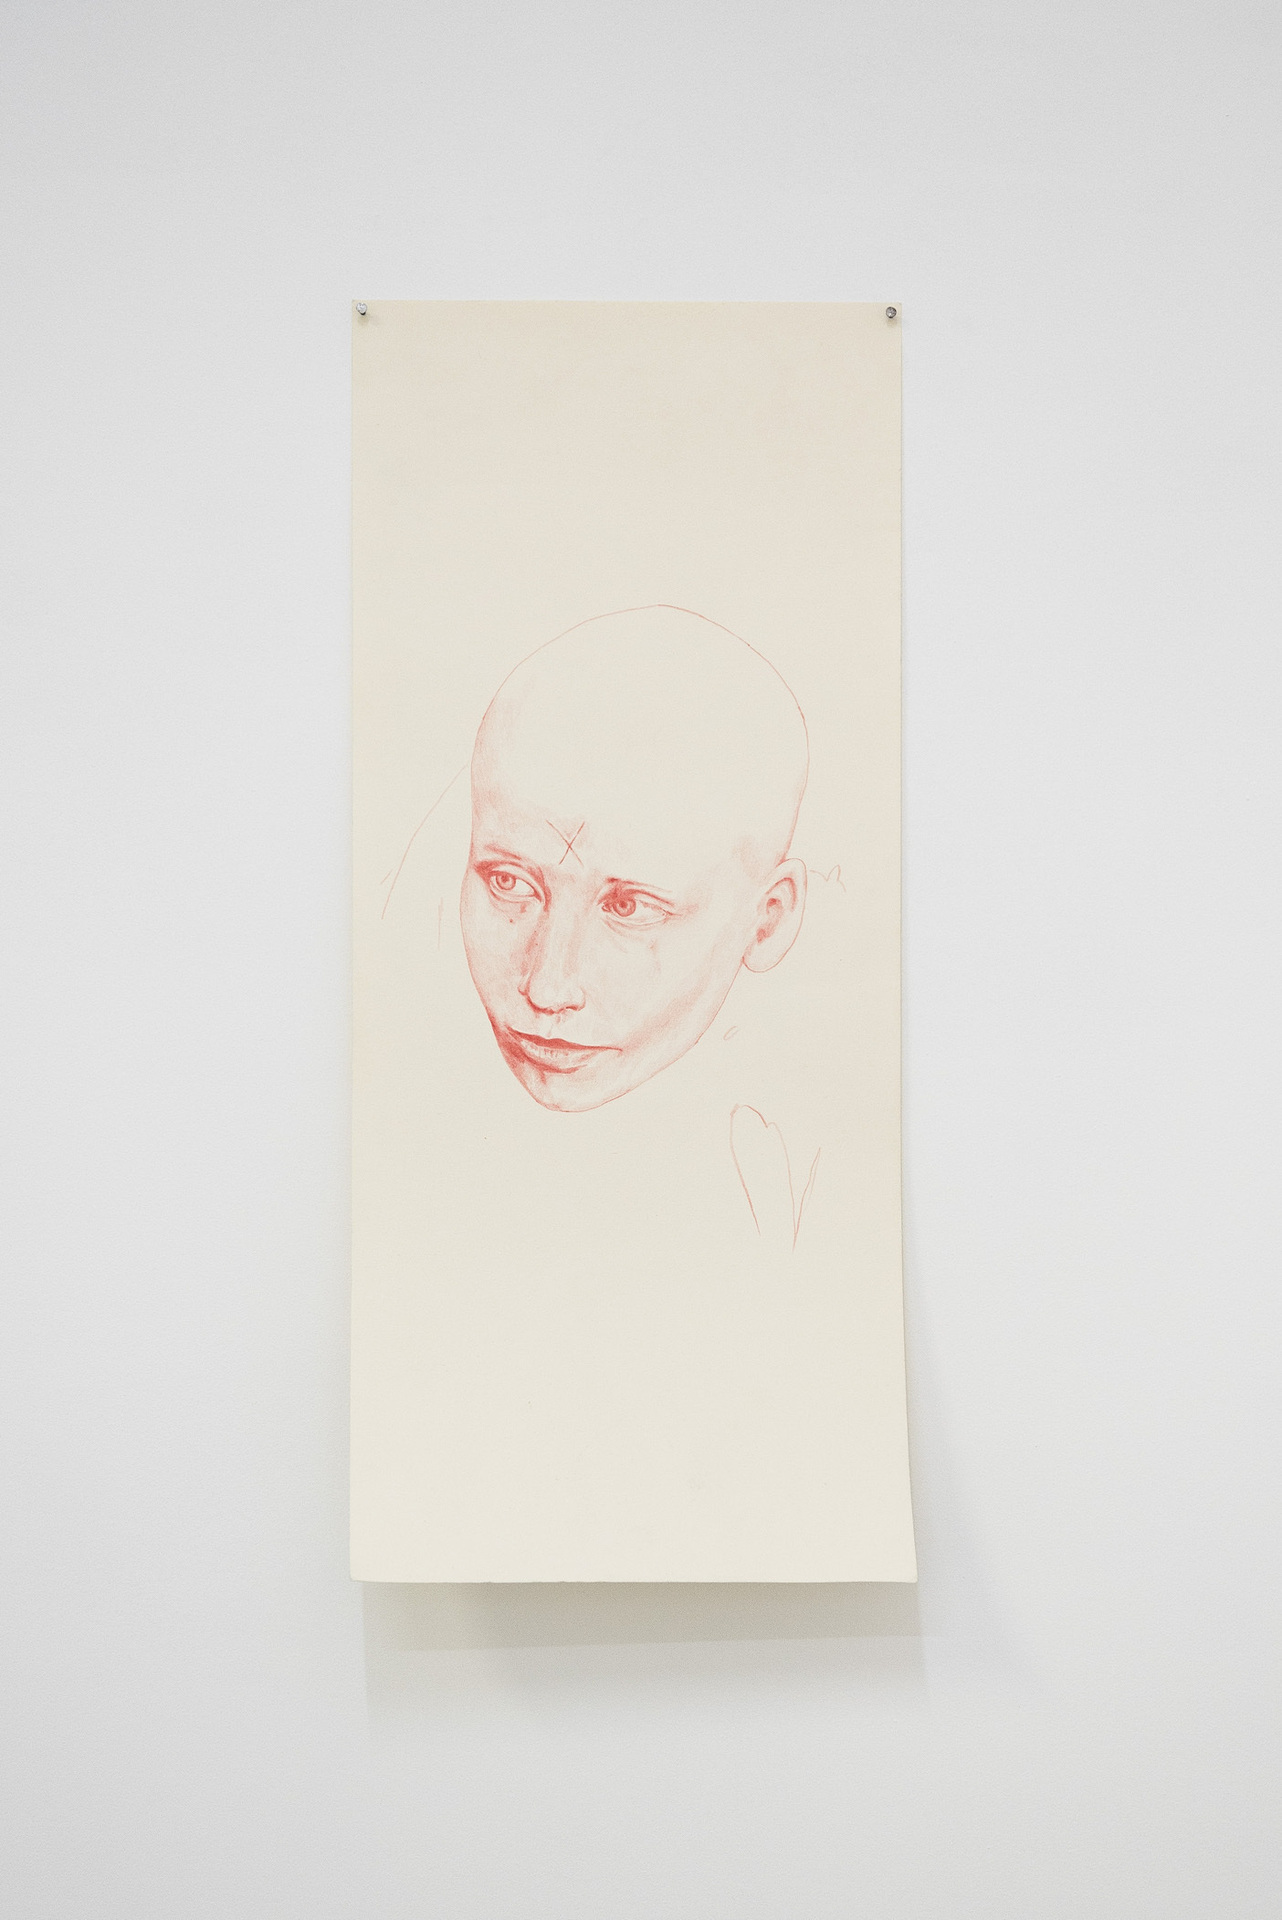 Gemma Pelagia, Leave Society, 2021, coloured pencil on paper, 48.5cm x 20.5cm